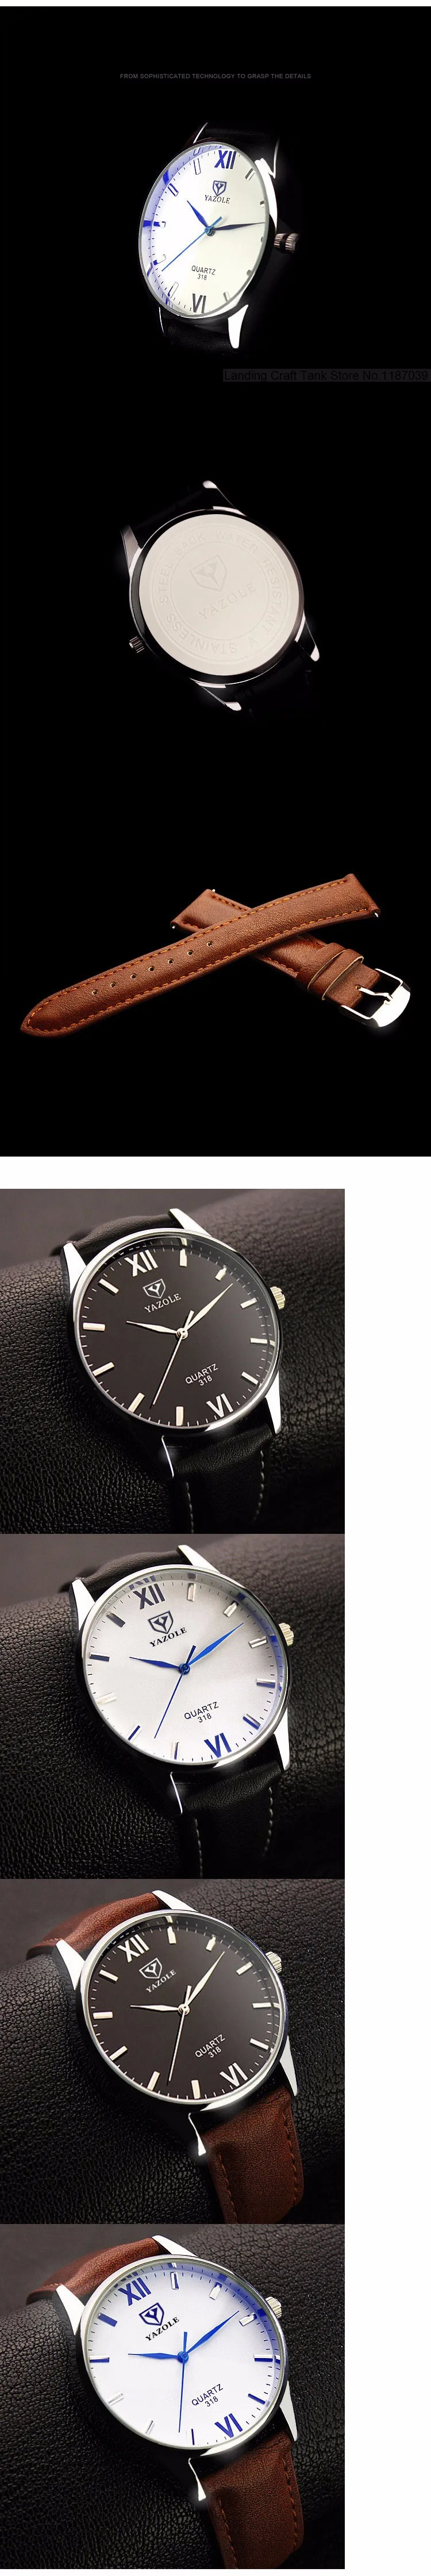 Yazole наручные часы Для мужчин лучший бренд класса люкс известный Наручные Мужской часы кварцевые часы hodinky кварцевые часы часы мужские часы мужские наручные часы наручные часы мужские Часы мода тенденция